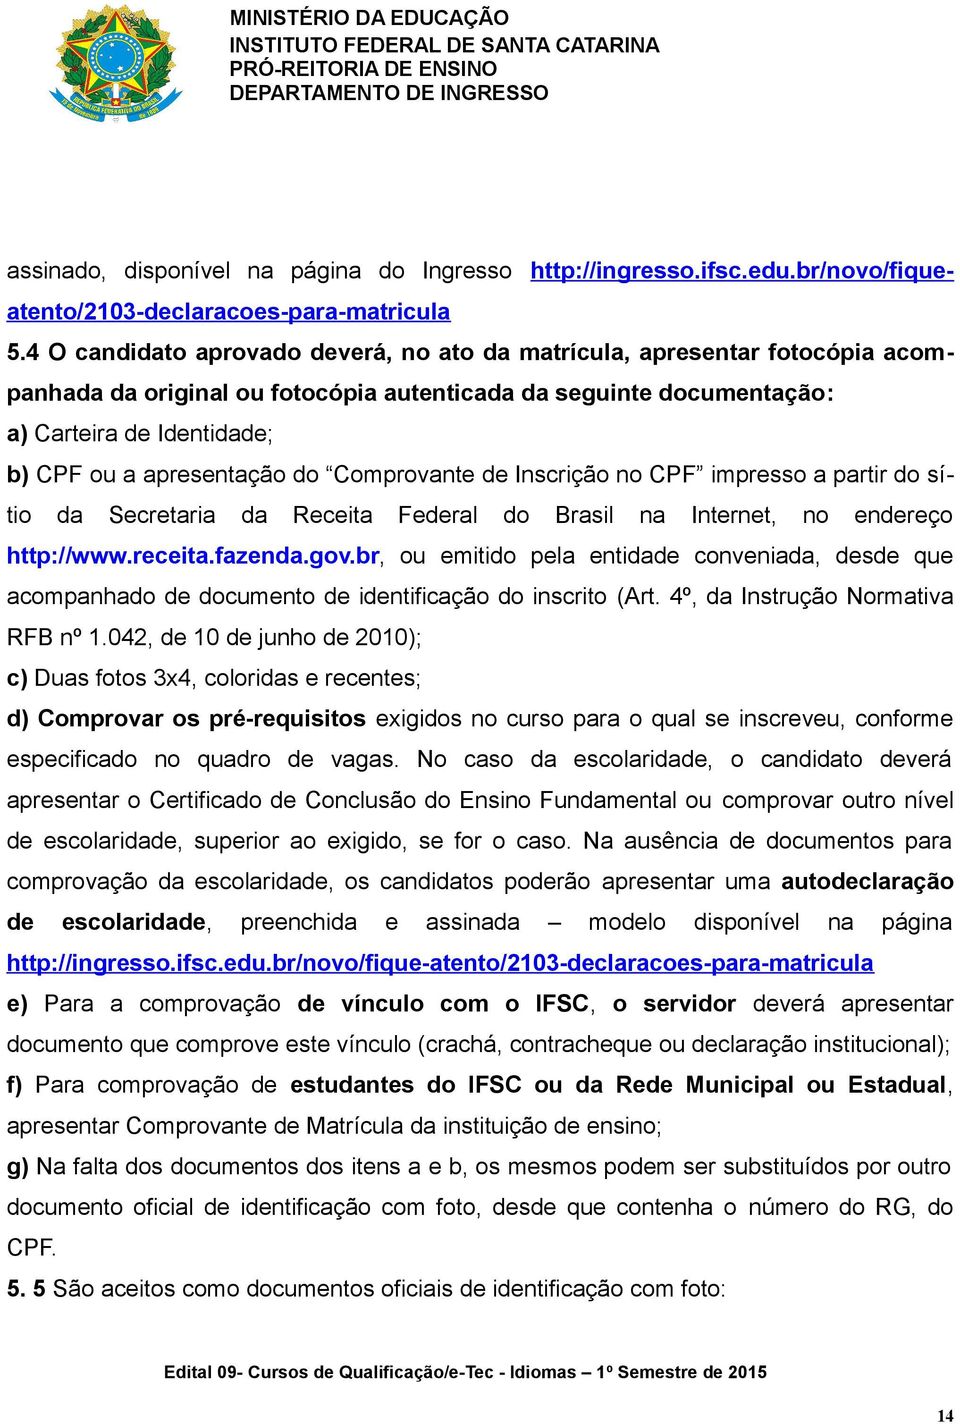 CPF impresso prtir do sítio d Secretri d Receit Federl do Brsil n Internet, no endereço http://www.receit.fzend.gov.